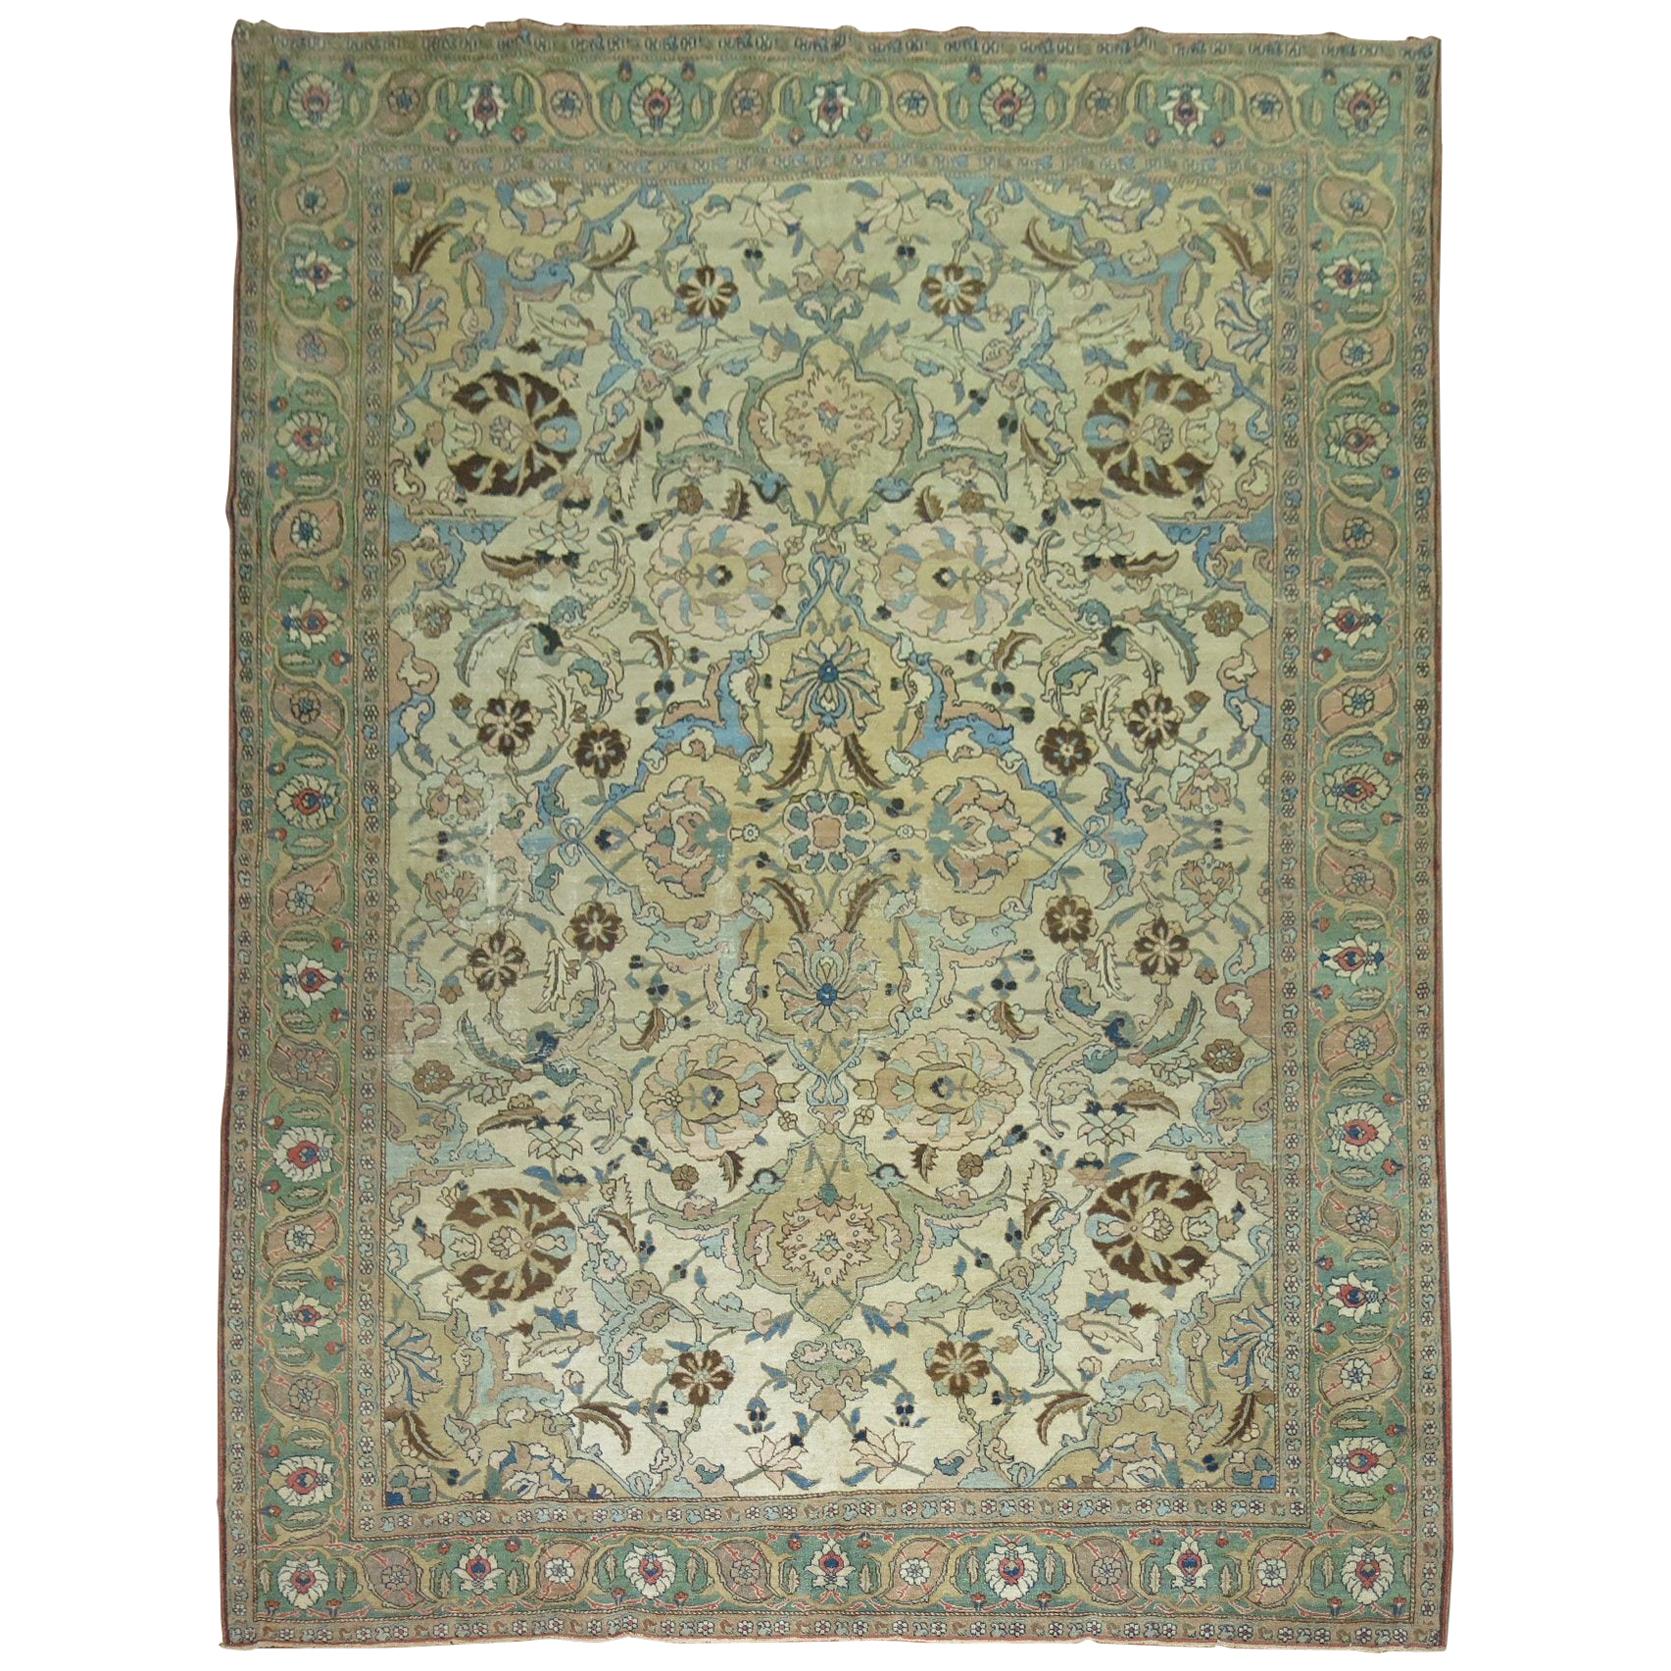 Antique Persian Tabriz Decorative Room Size Rug